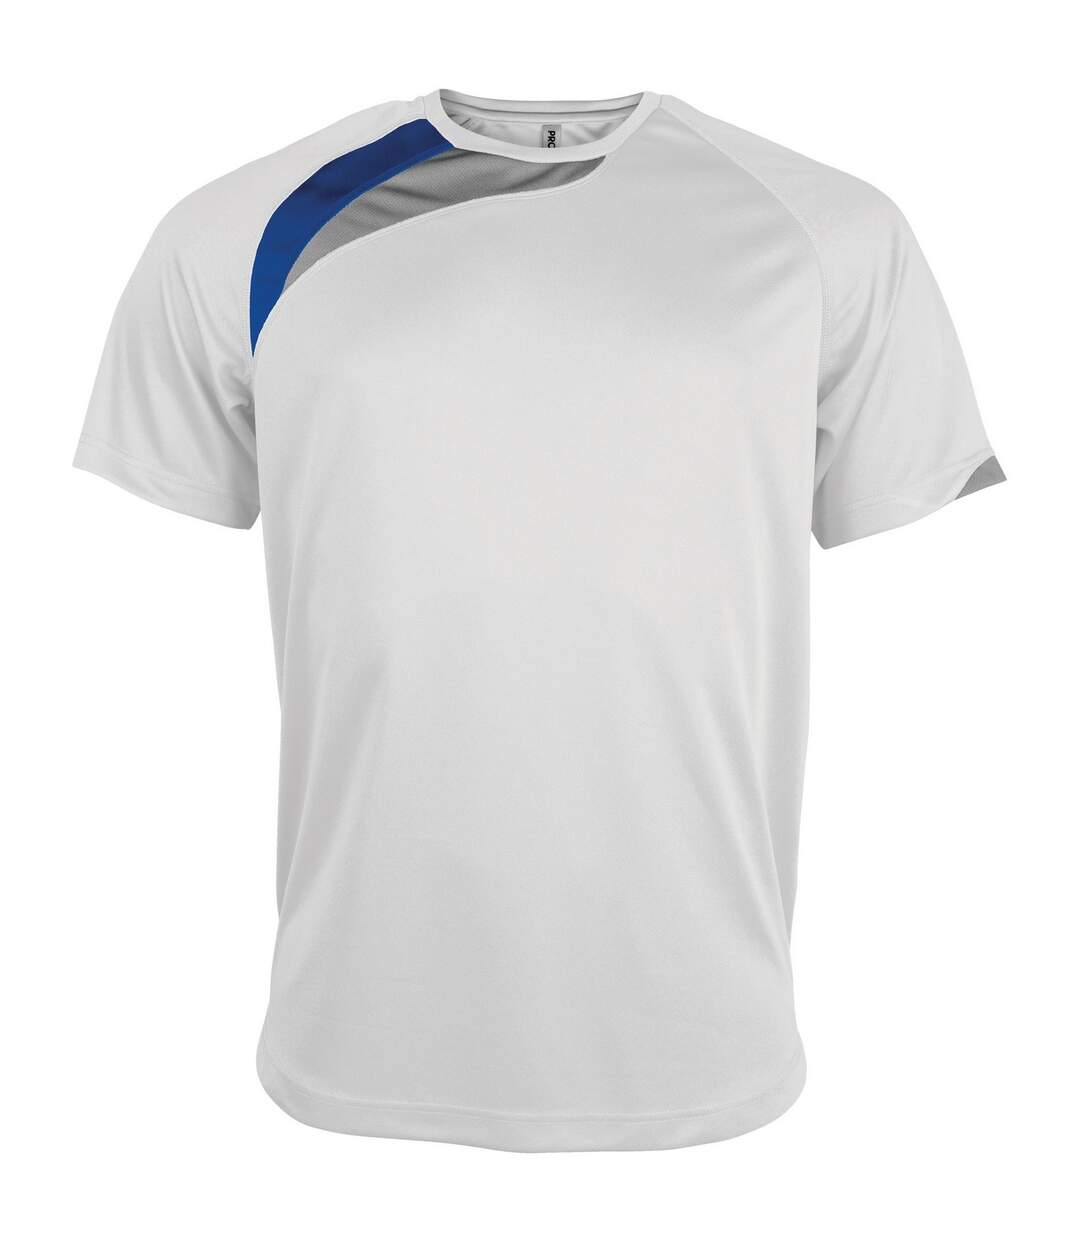 Kariban Proact - T-shirt sport à manches courtes - Homme (Blanc/Bleu roi/Gris) - UTRW4243